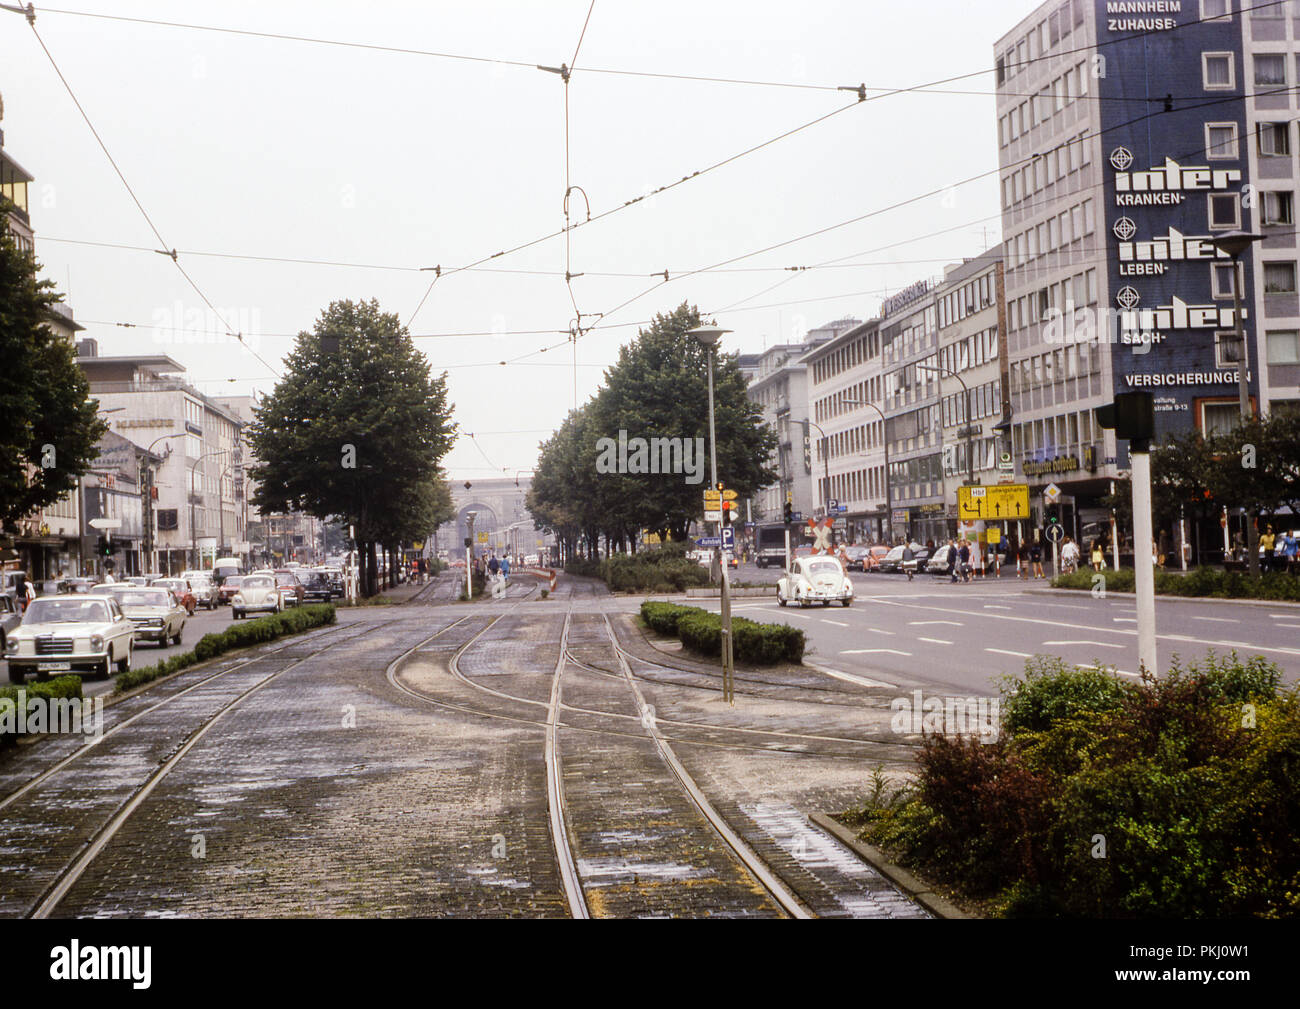 Mannheim Hauptbahnhof, crocevia di Bismarckstrasse e Kaiserring, Mannheim, Germania. Archivio originale immagine presa in agosto 1973. Foto Stock